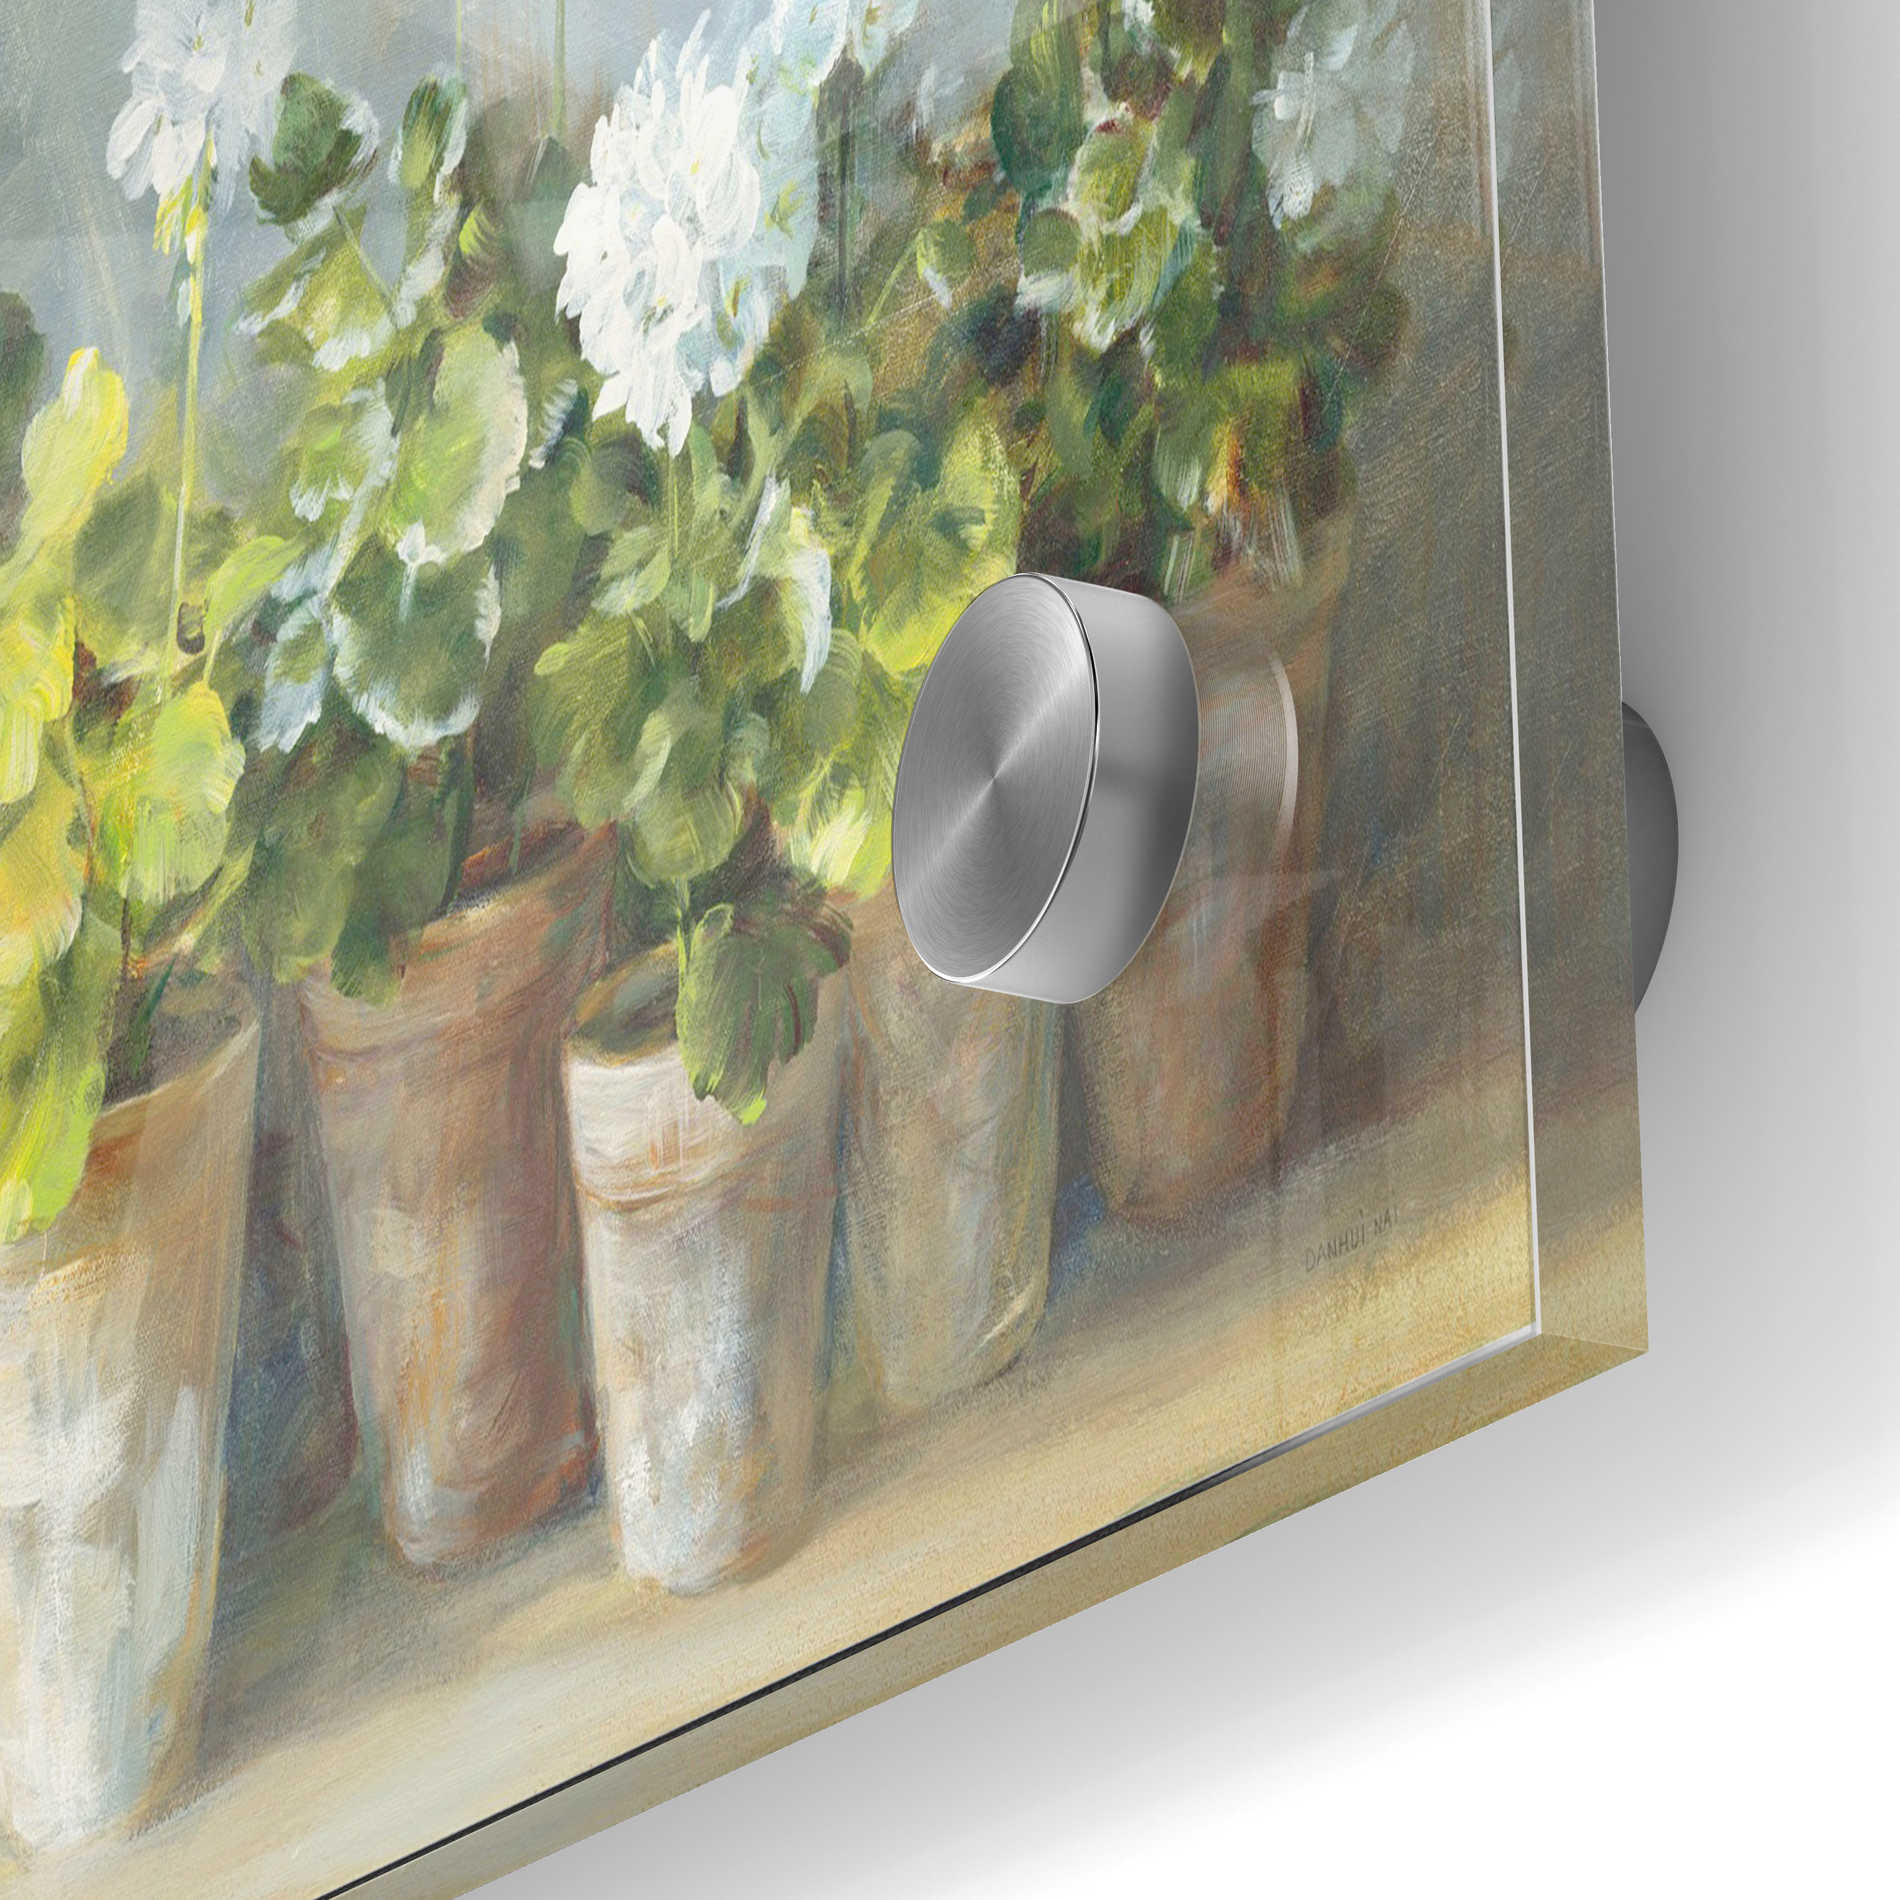 Epic Art 'White Geraniums Crop' by Danhui Nai, Acrylic Glass Wall Art,24x36